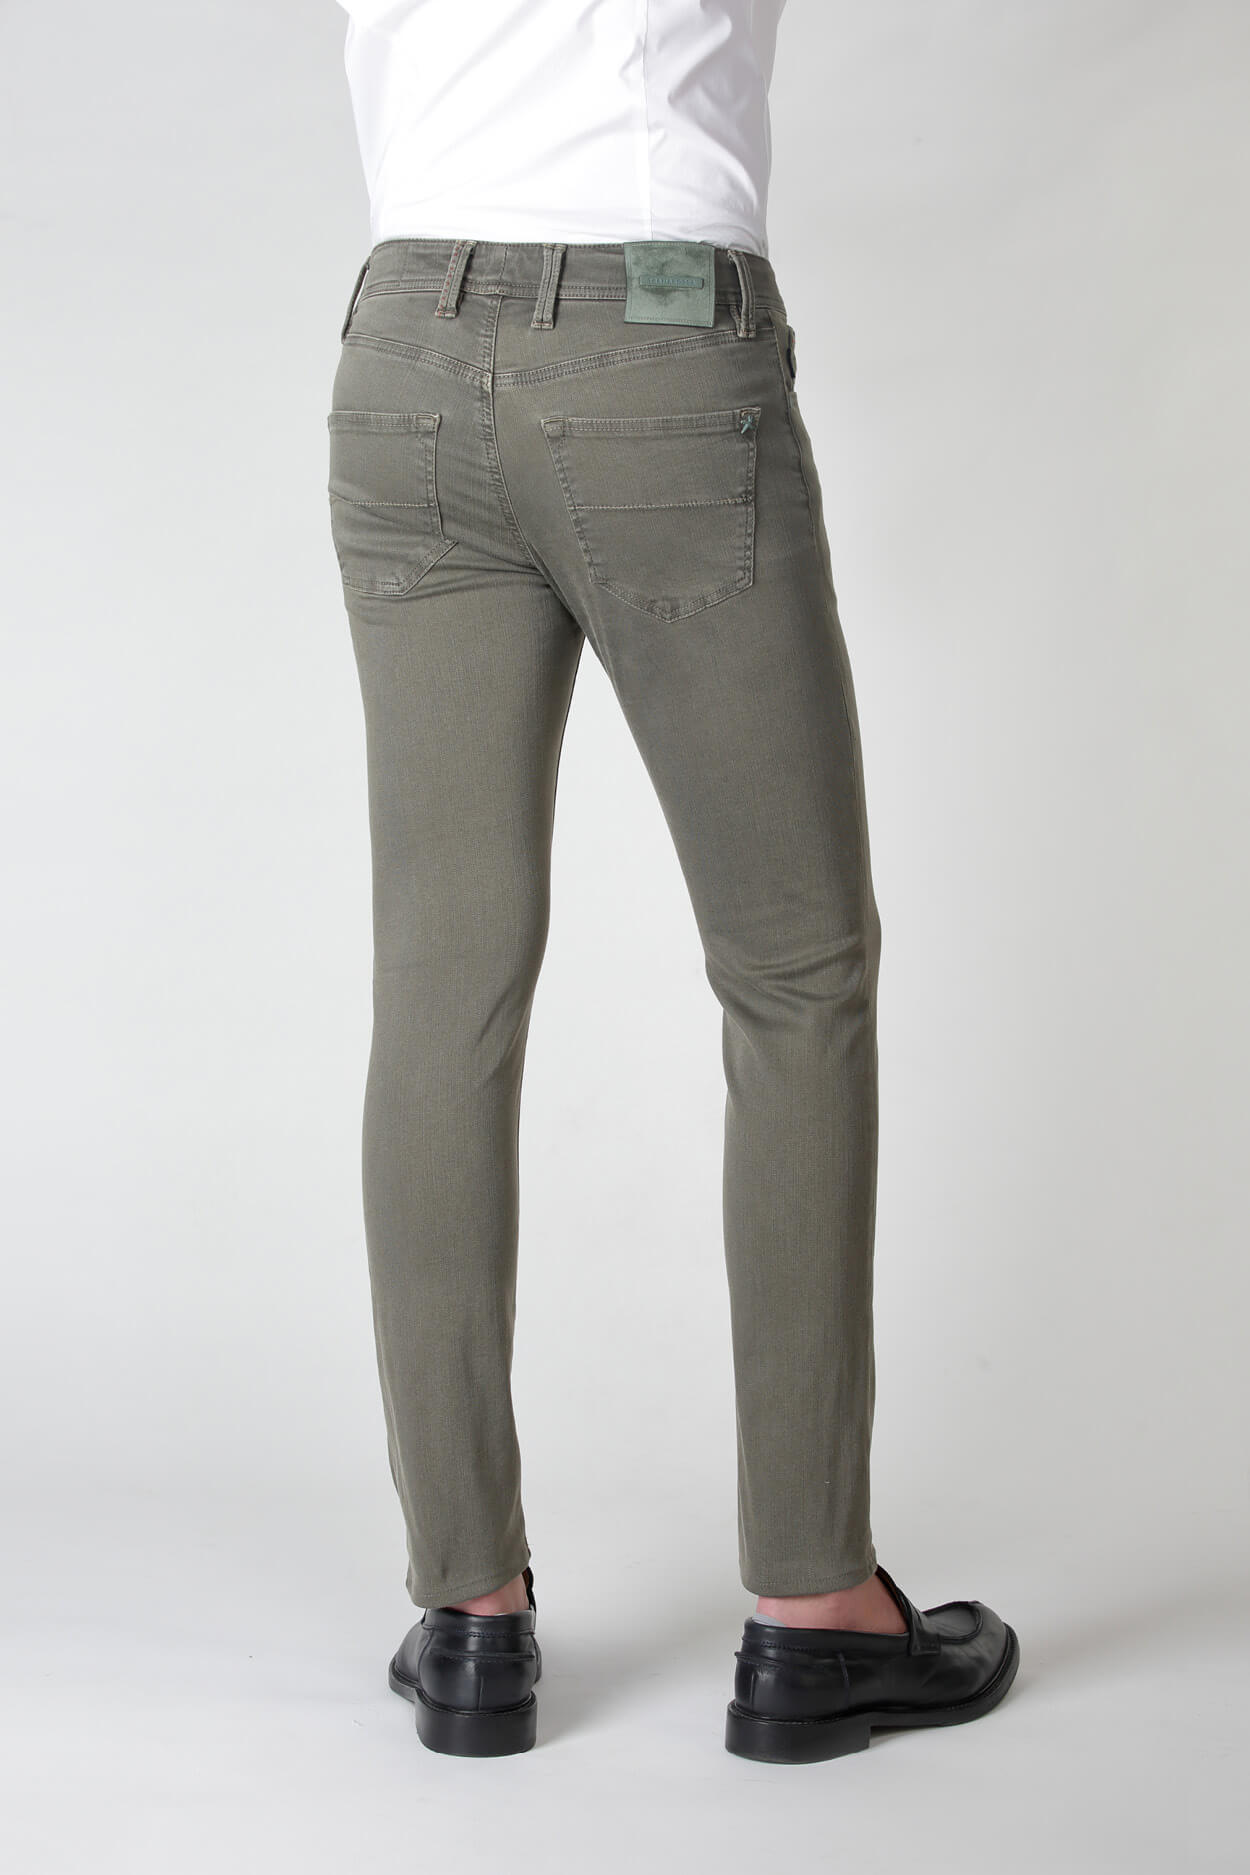 Tramarossa Jeans - COLORED SUPERSTRETCH GABARDINE - Model: LEONARDO SLIM